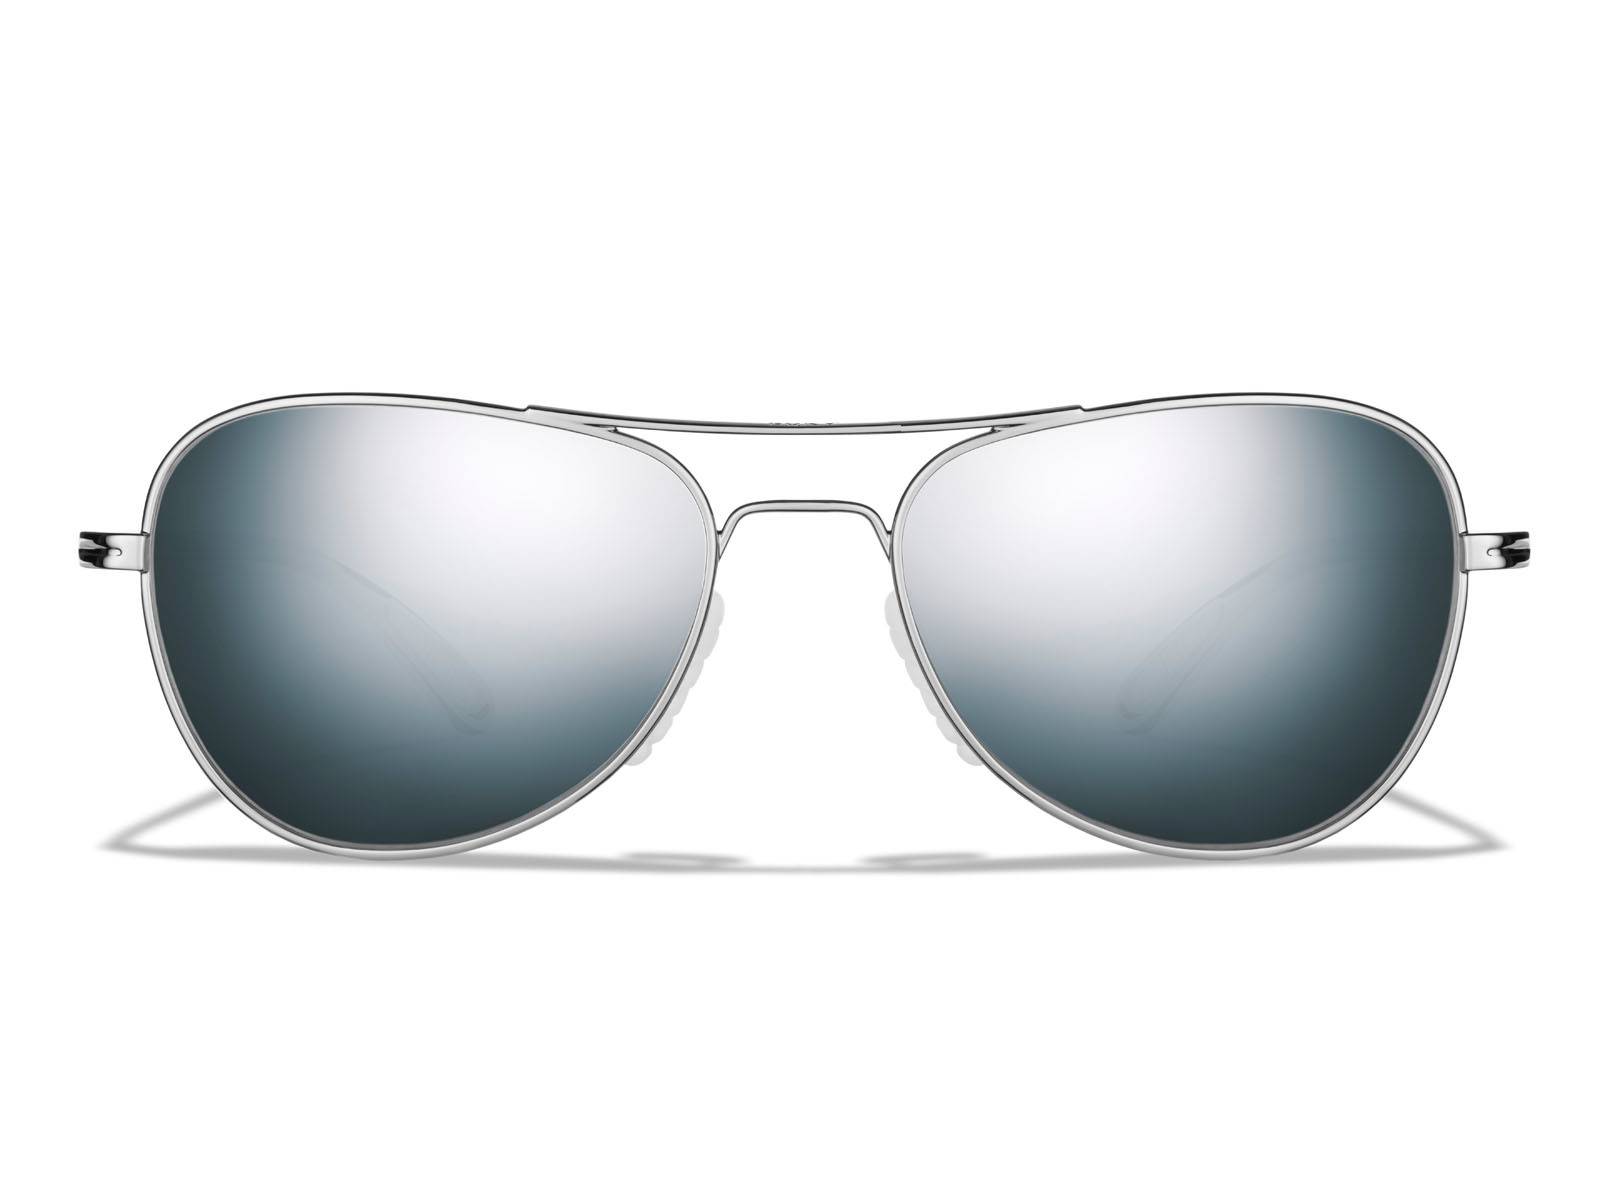 Small Aviators - Round Aviators - Comfortable Sunglasses